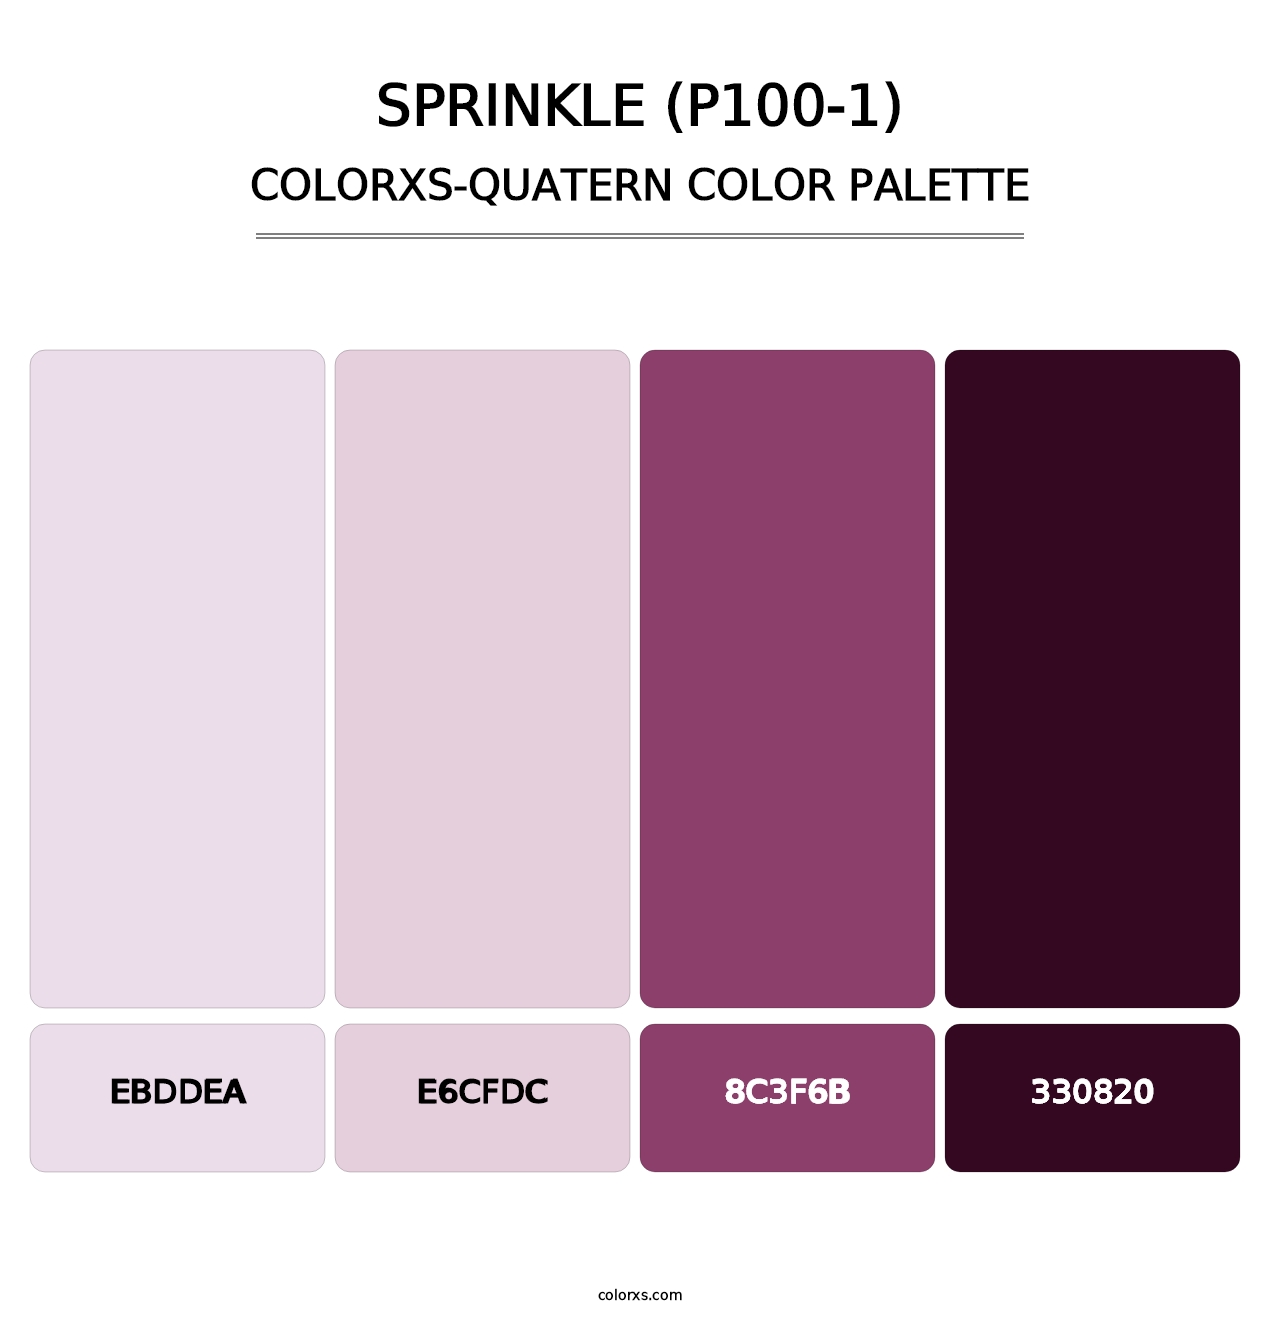 Sprinkle (P100-1) - Colorxs Quatern Palette